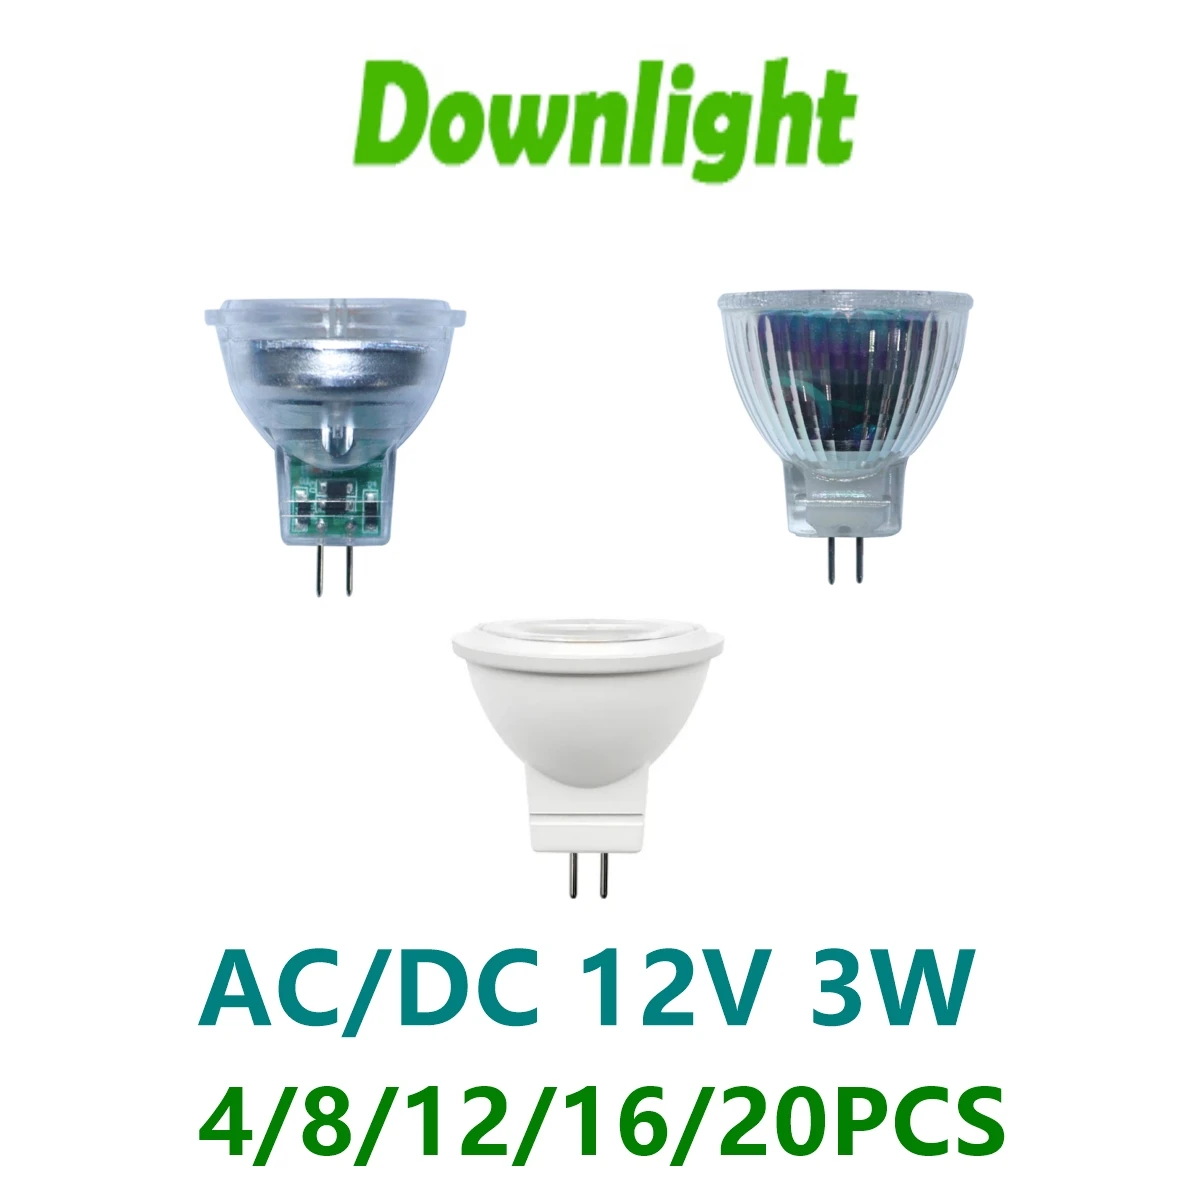 4-20PCS LED Mini spotlight MR11 GU4.0 Low voltage AC/DC 12V 3W 3000K/4000K/6000K super light suitable for kitchen and study